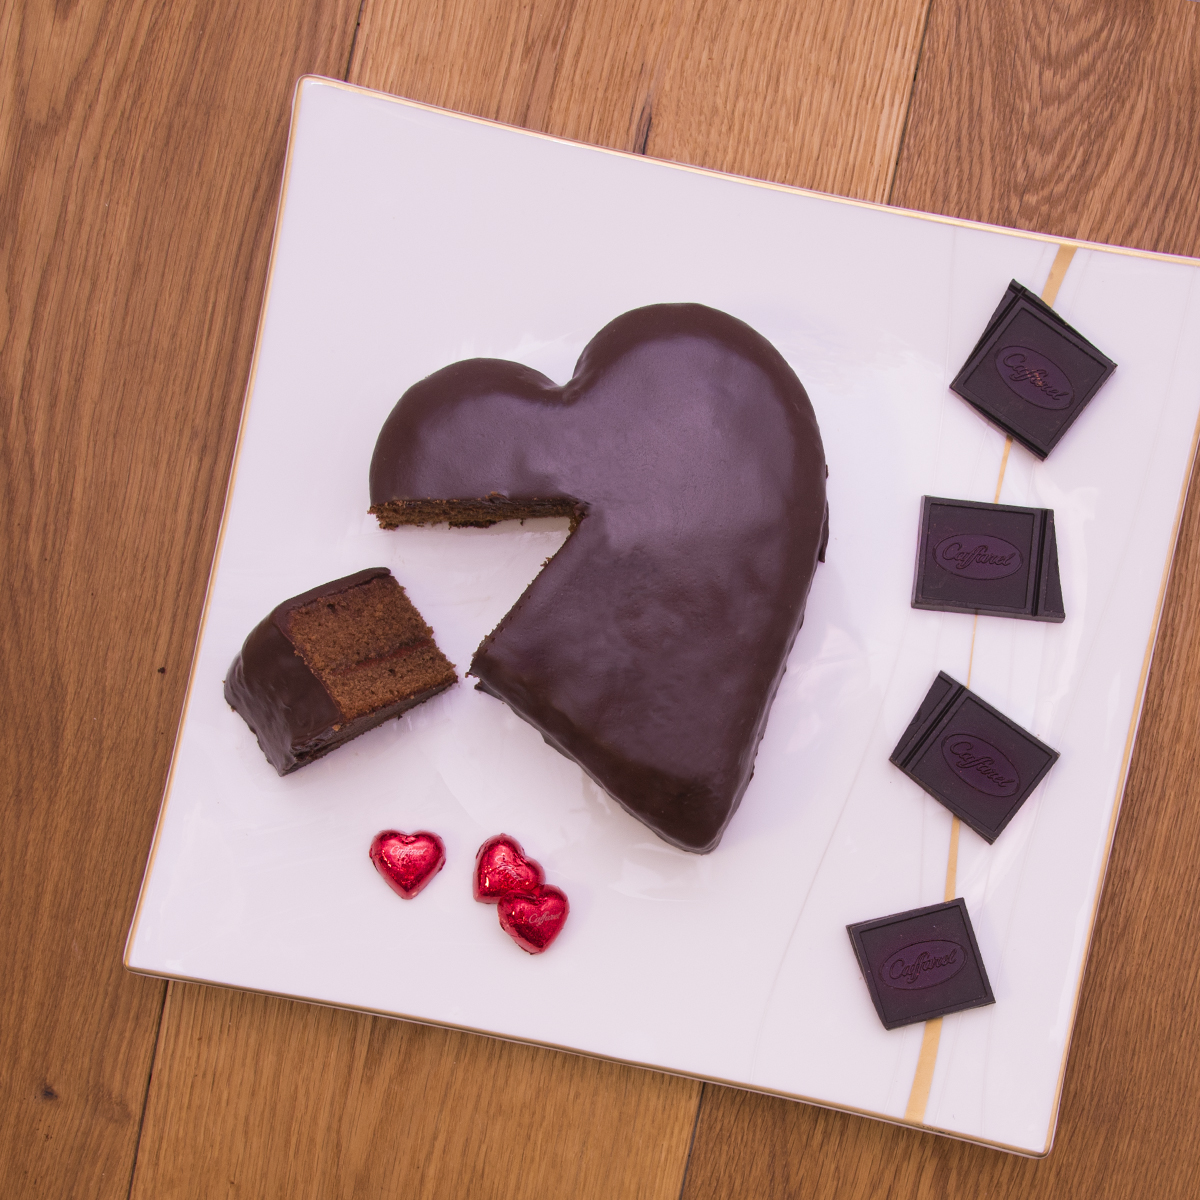 Original Sacher Torte Recipe for Two Lovers - Santa Barbara Chocolate